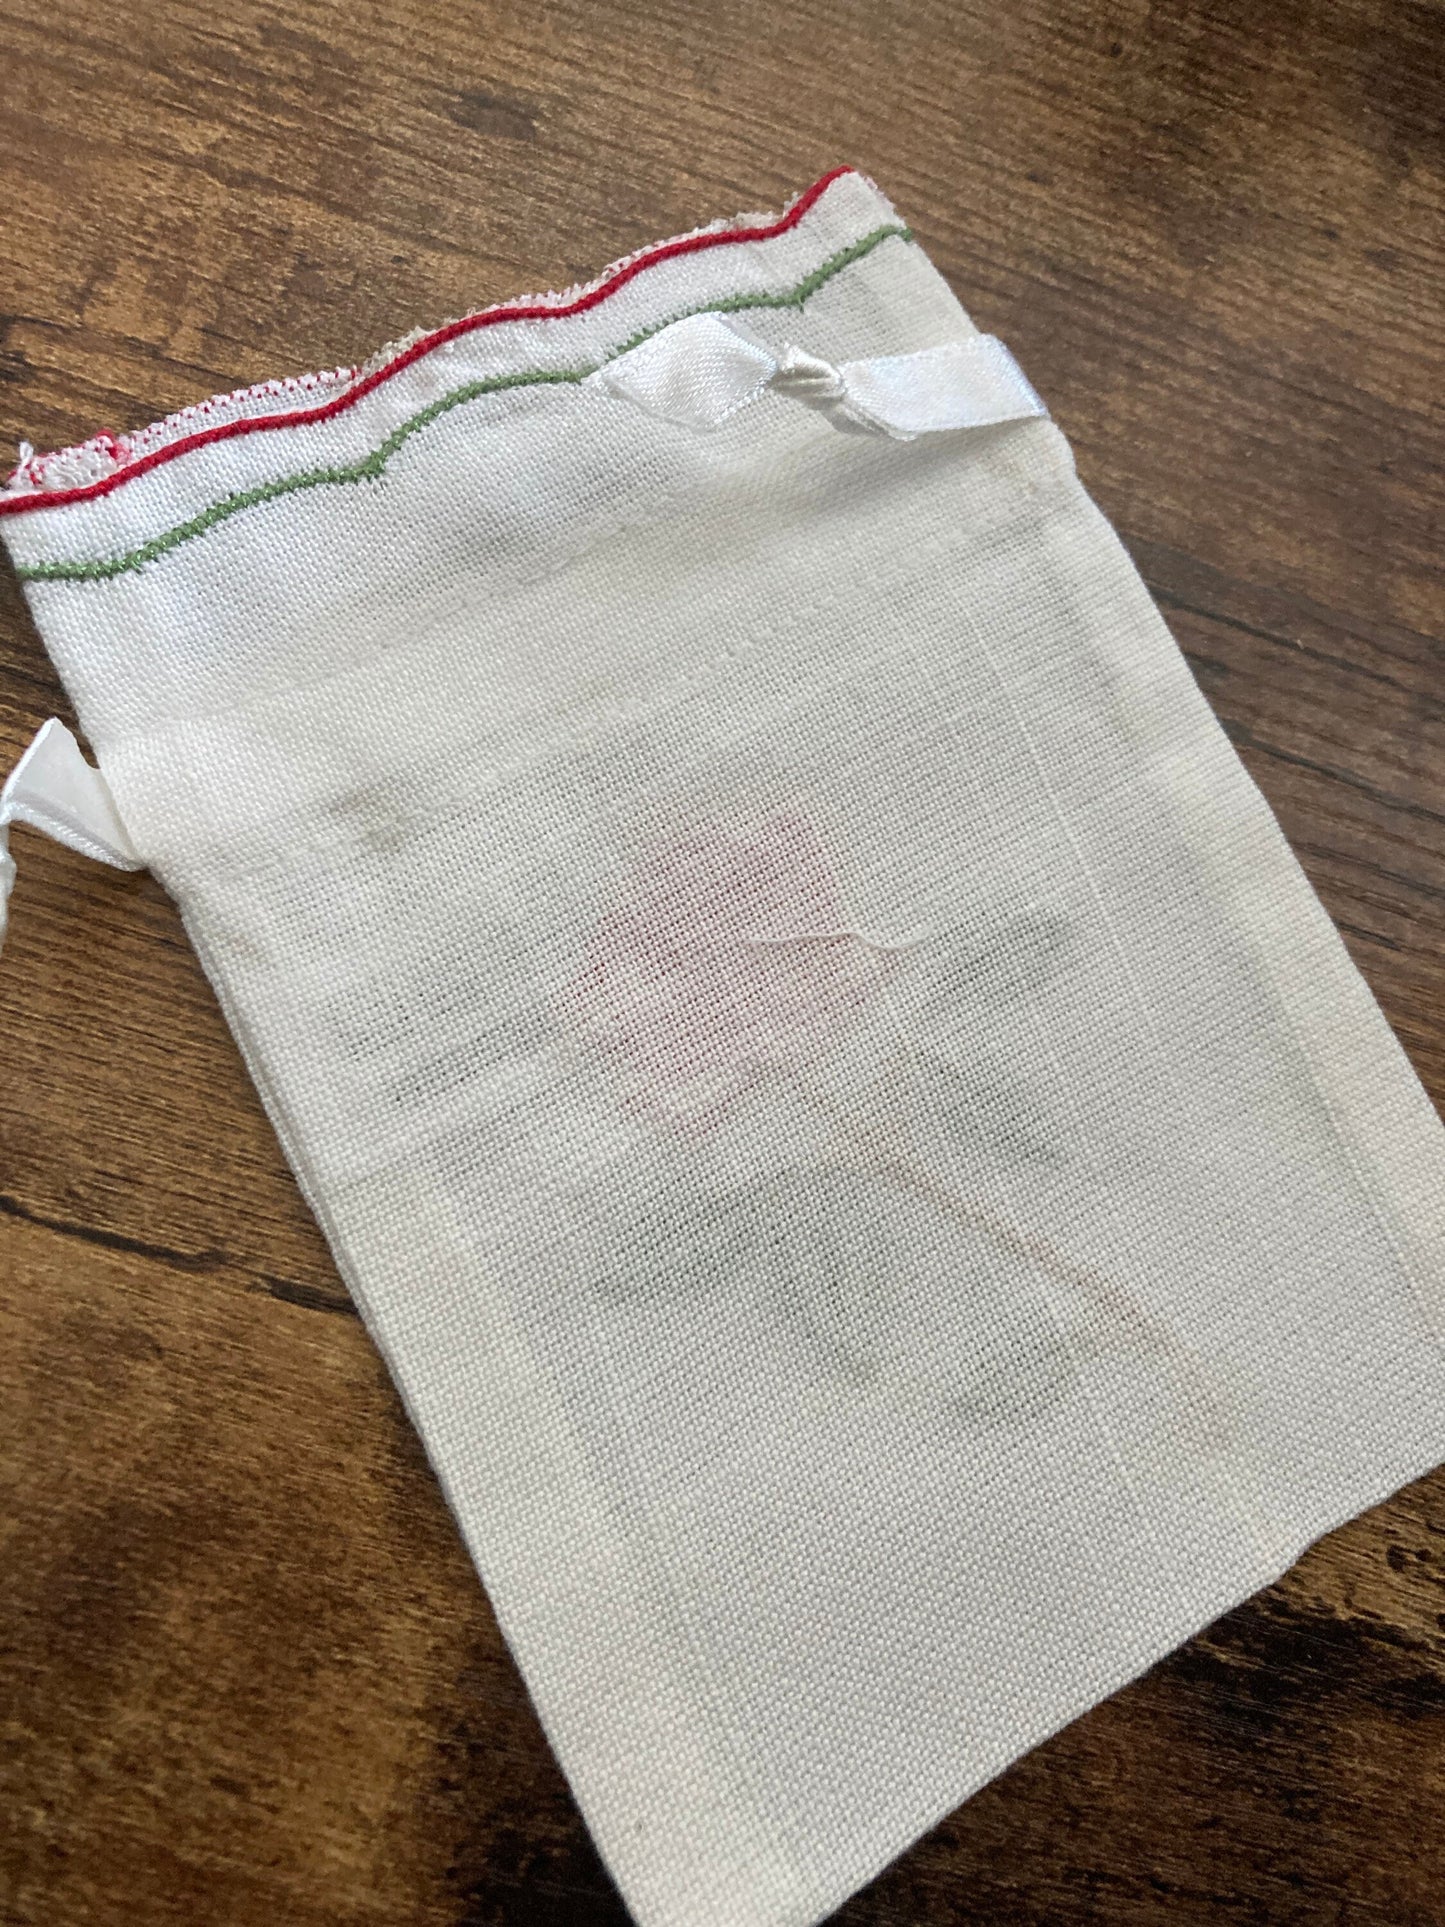 embroidered red English rose linen bag drawstring bag smalls storage size 10x15cm